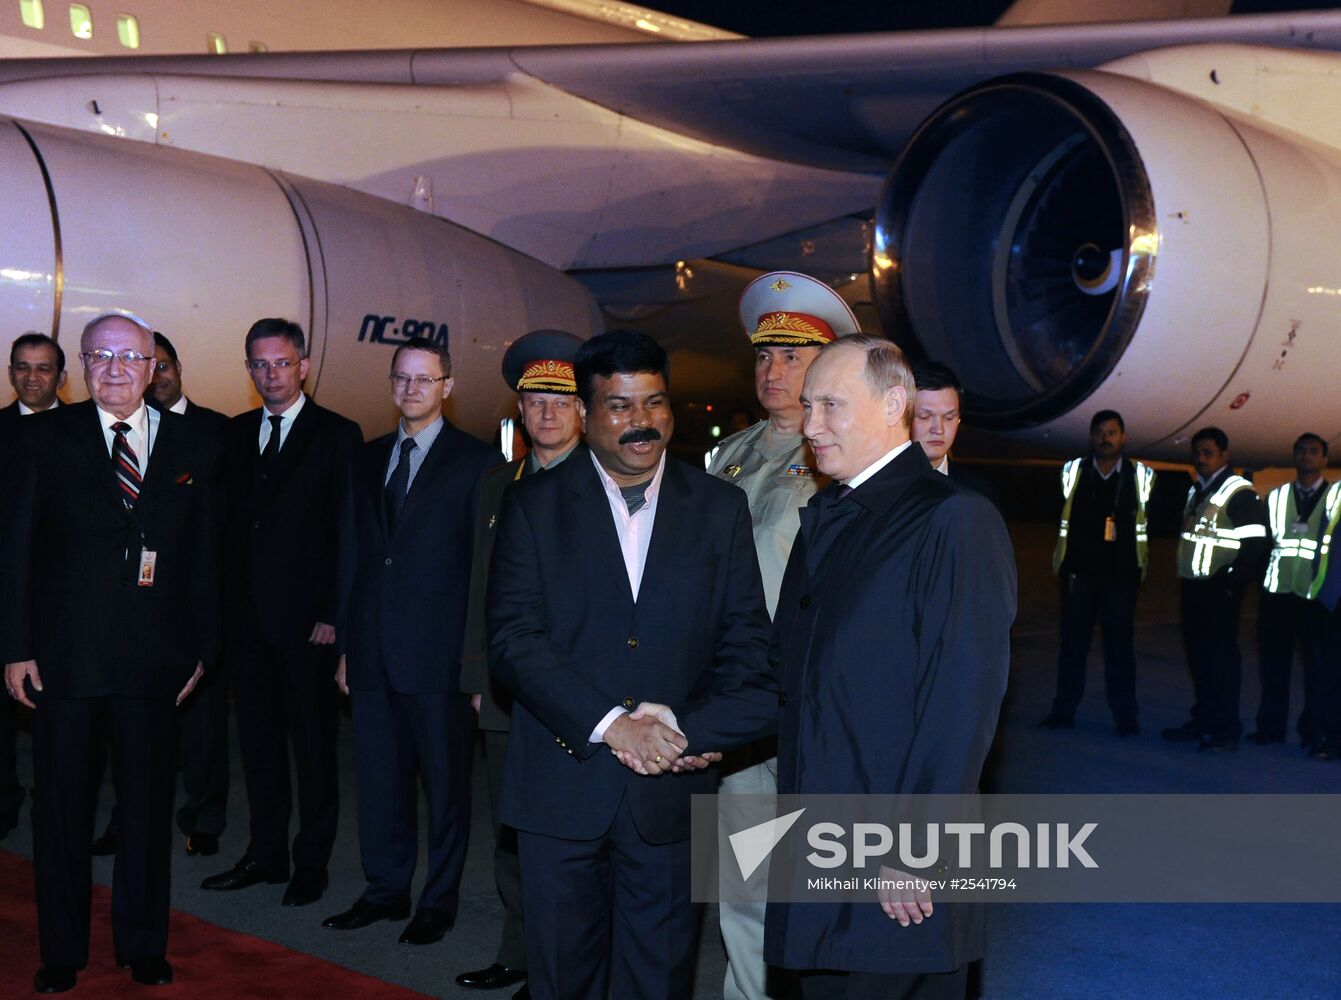 Vladimir Putin arrives in India for official visit